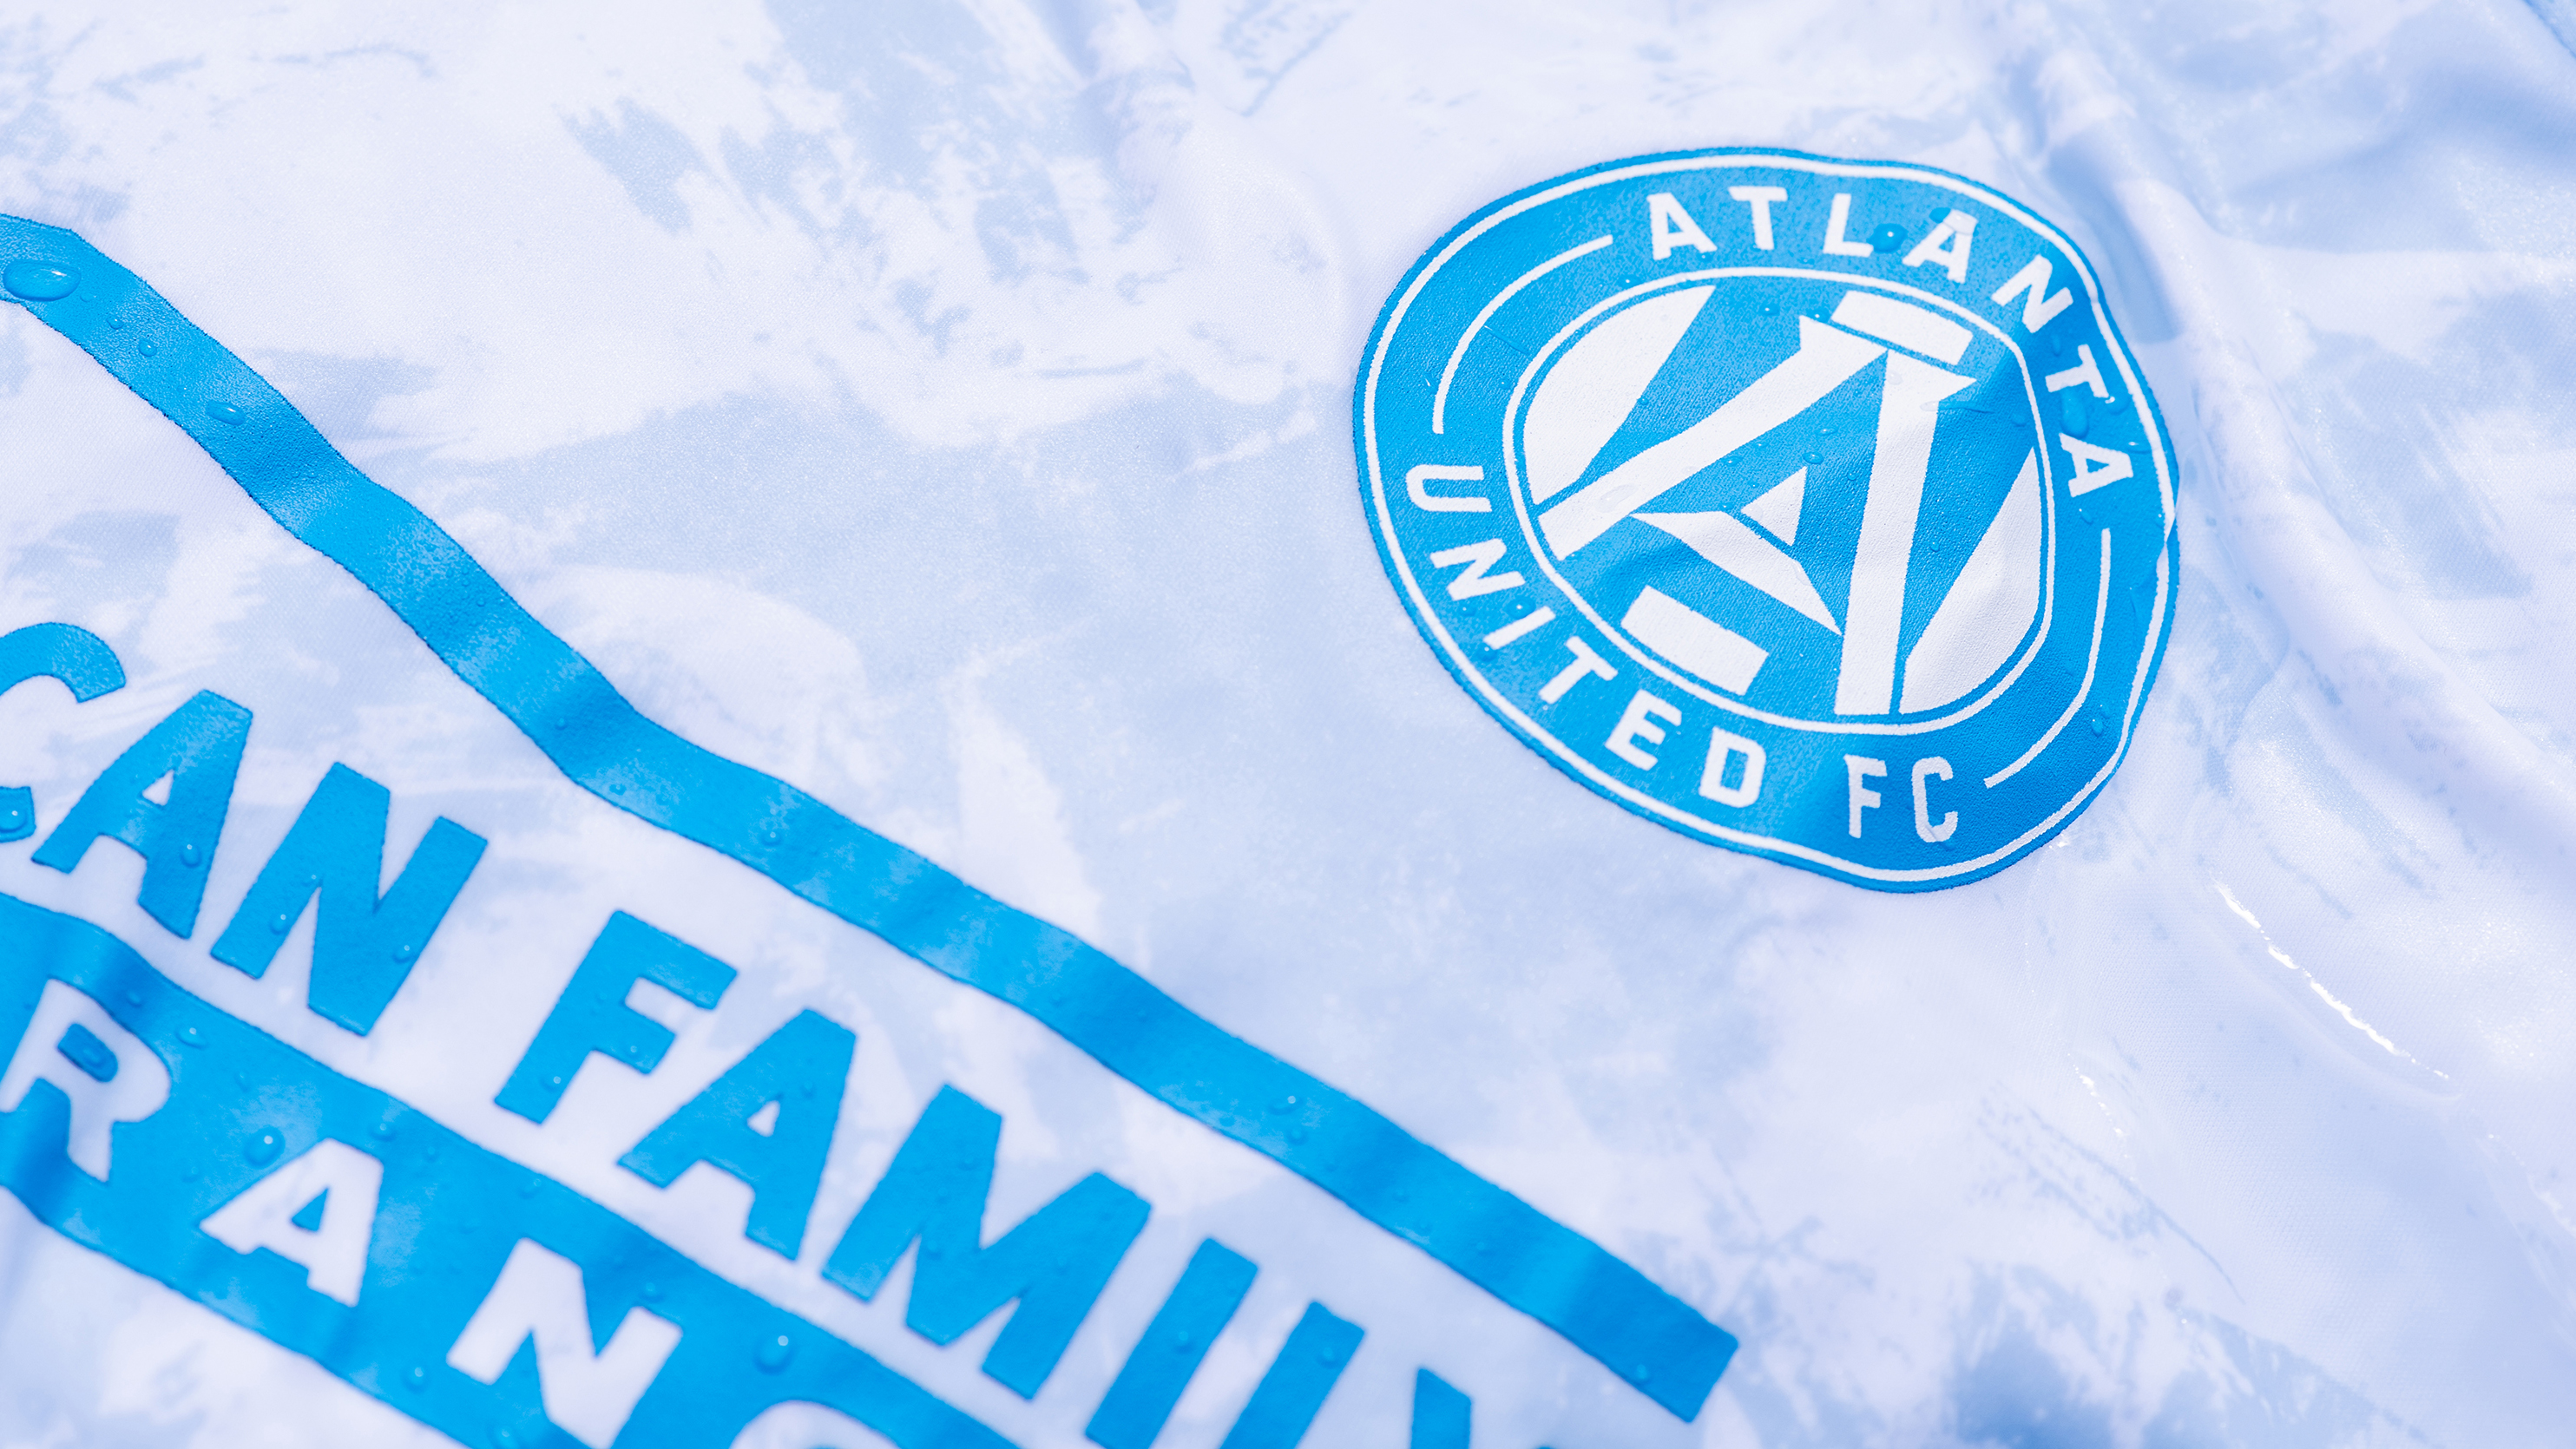 New MLS 2023 kits: Inter Miami, LAFC, Atlanta United, New York